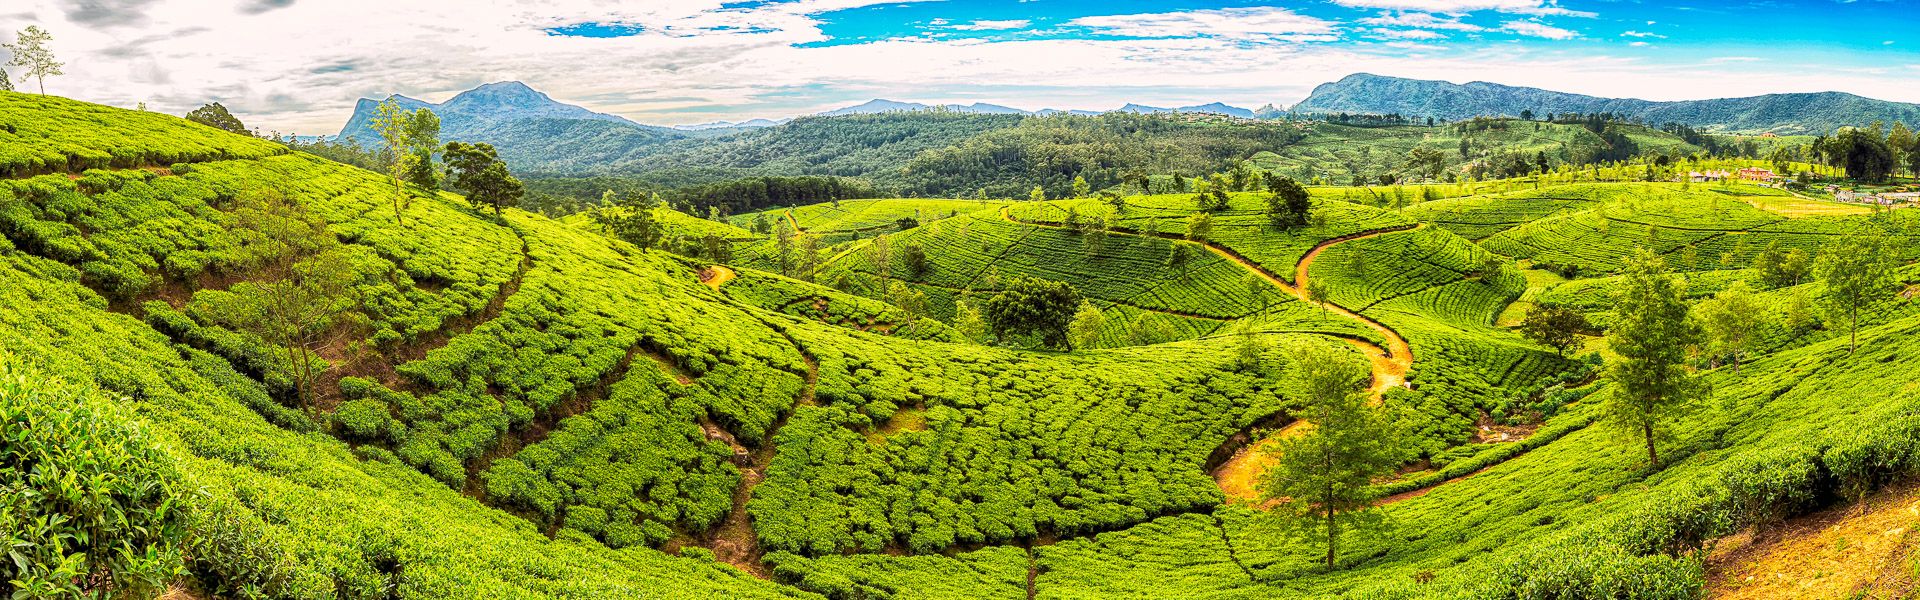 Riesige Teeplantage in Sri Lanka |  fmajor, iStockphoto.com / Chamleon